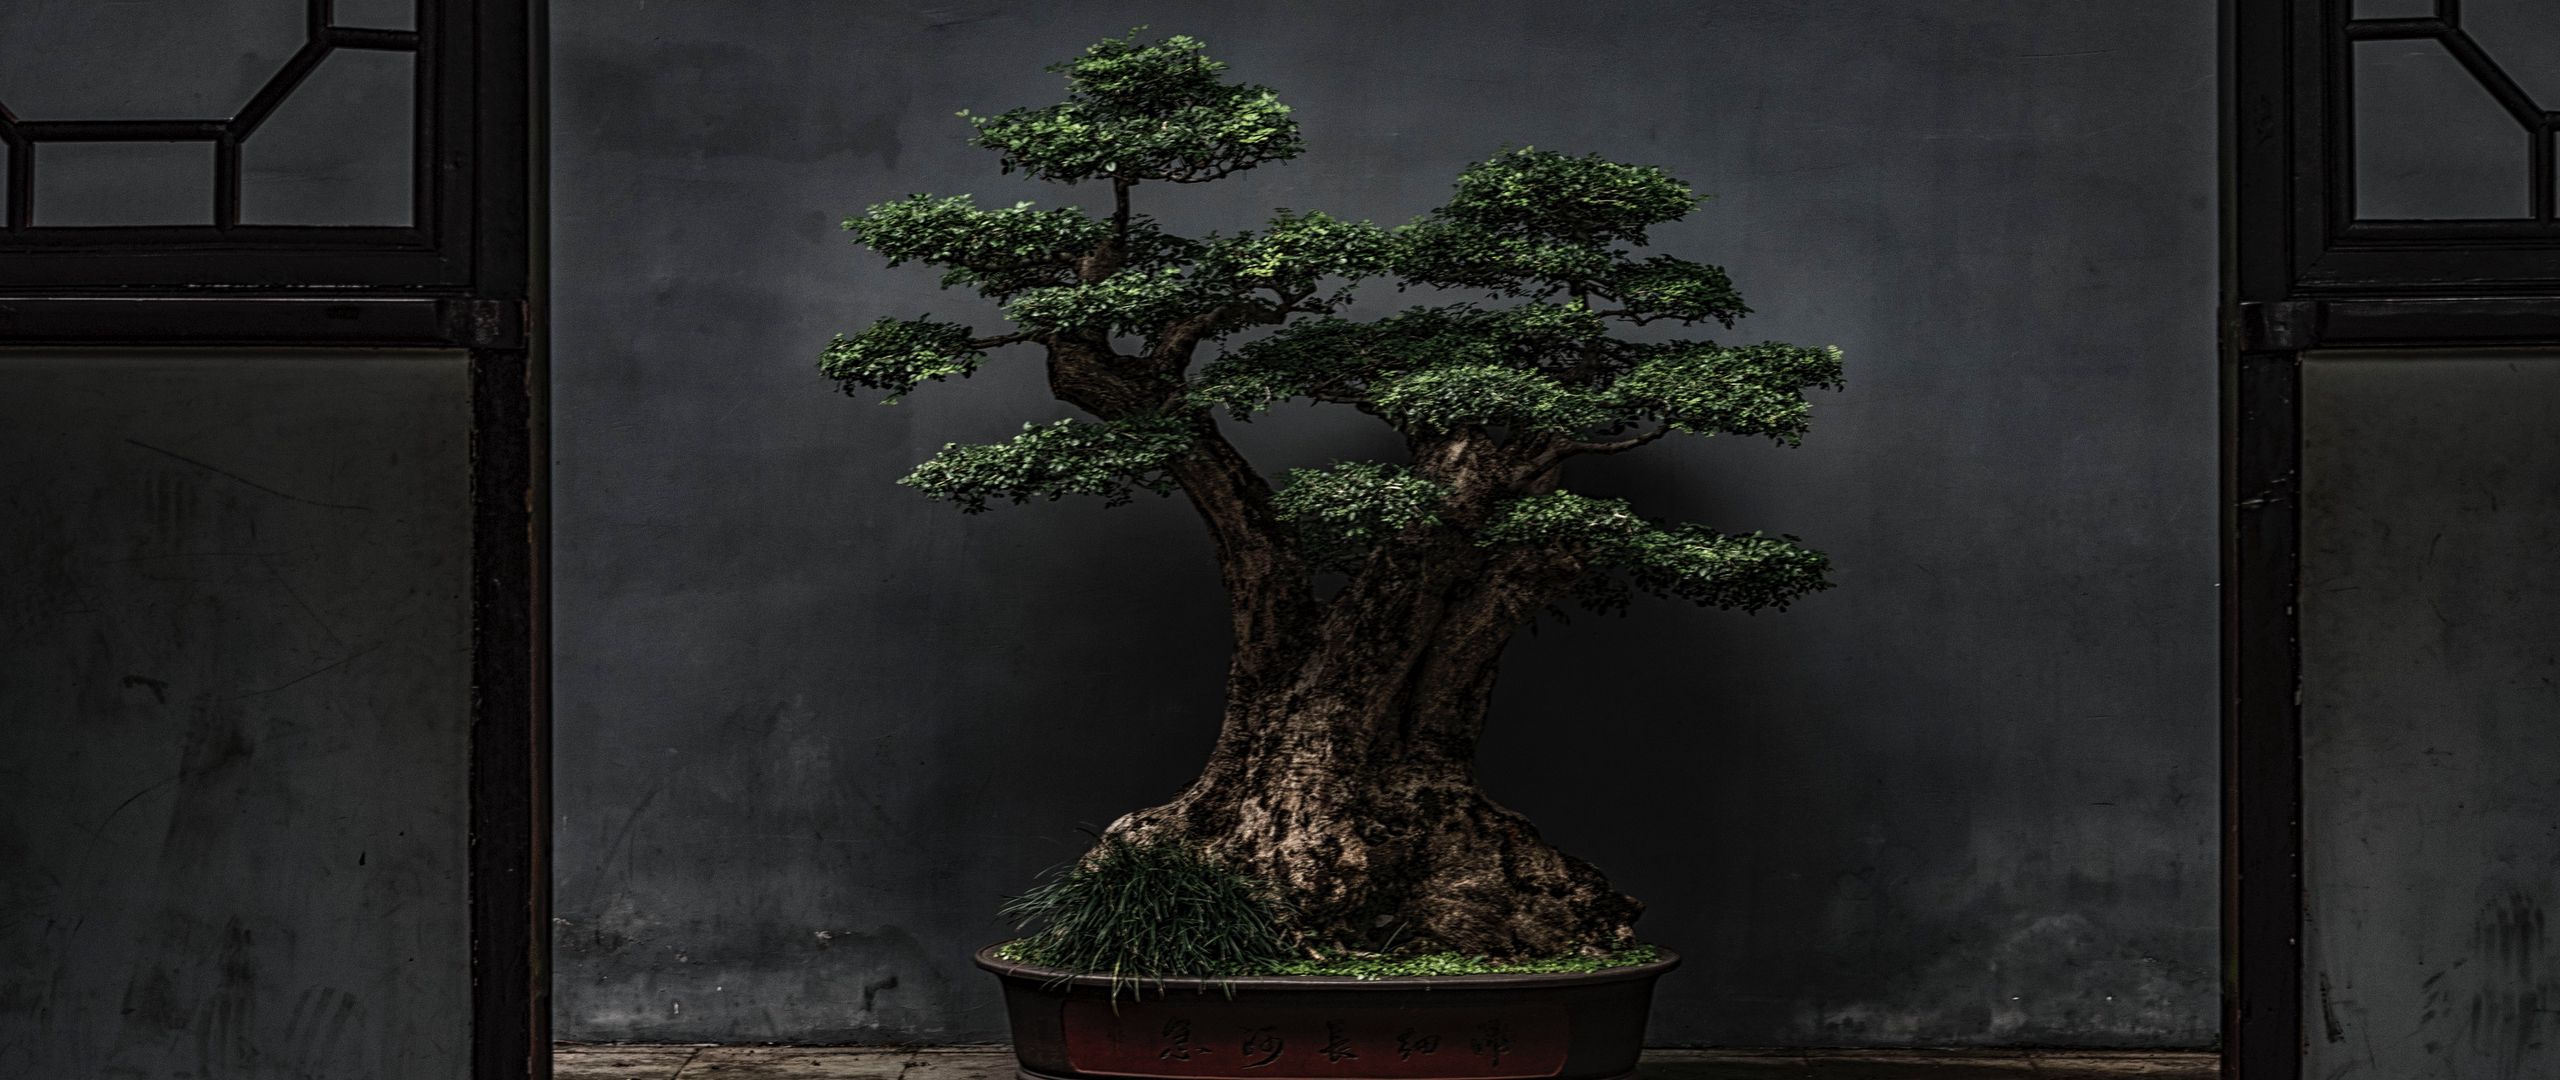 Download wallpaper 2560x1080 bonsai, tree, plant, decorative, door dual  wide 1080p hd background